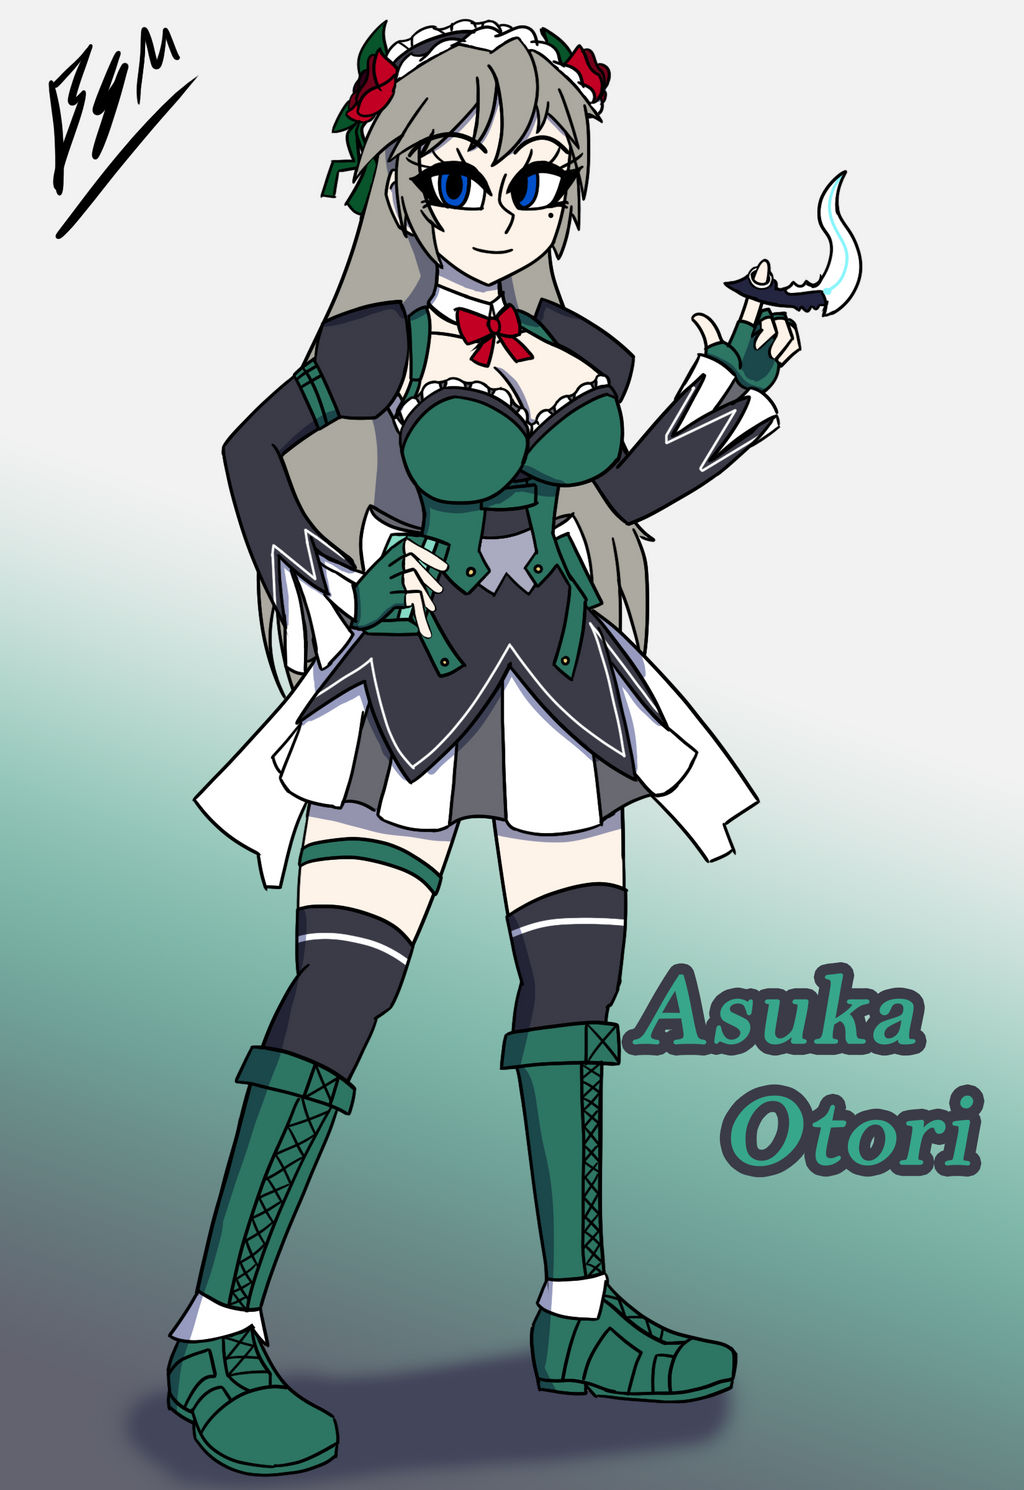 Magical Girl Spec Ops Asuka